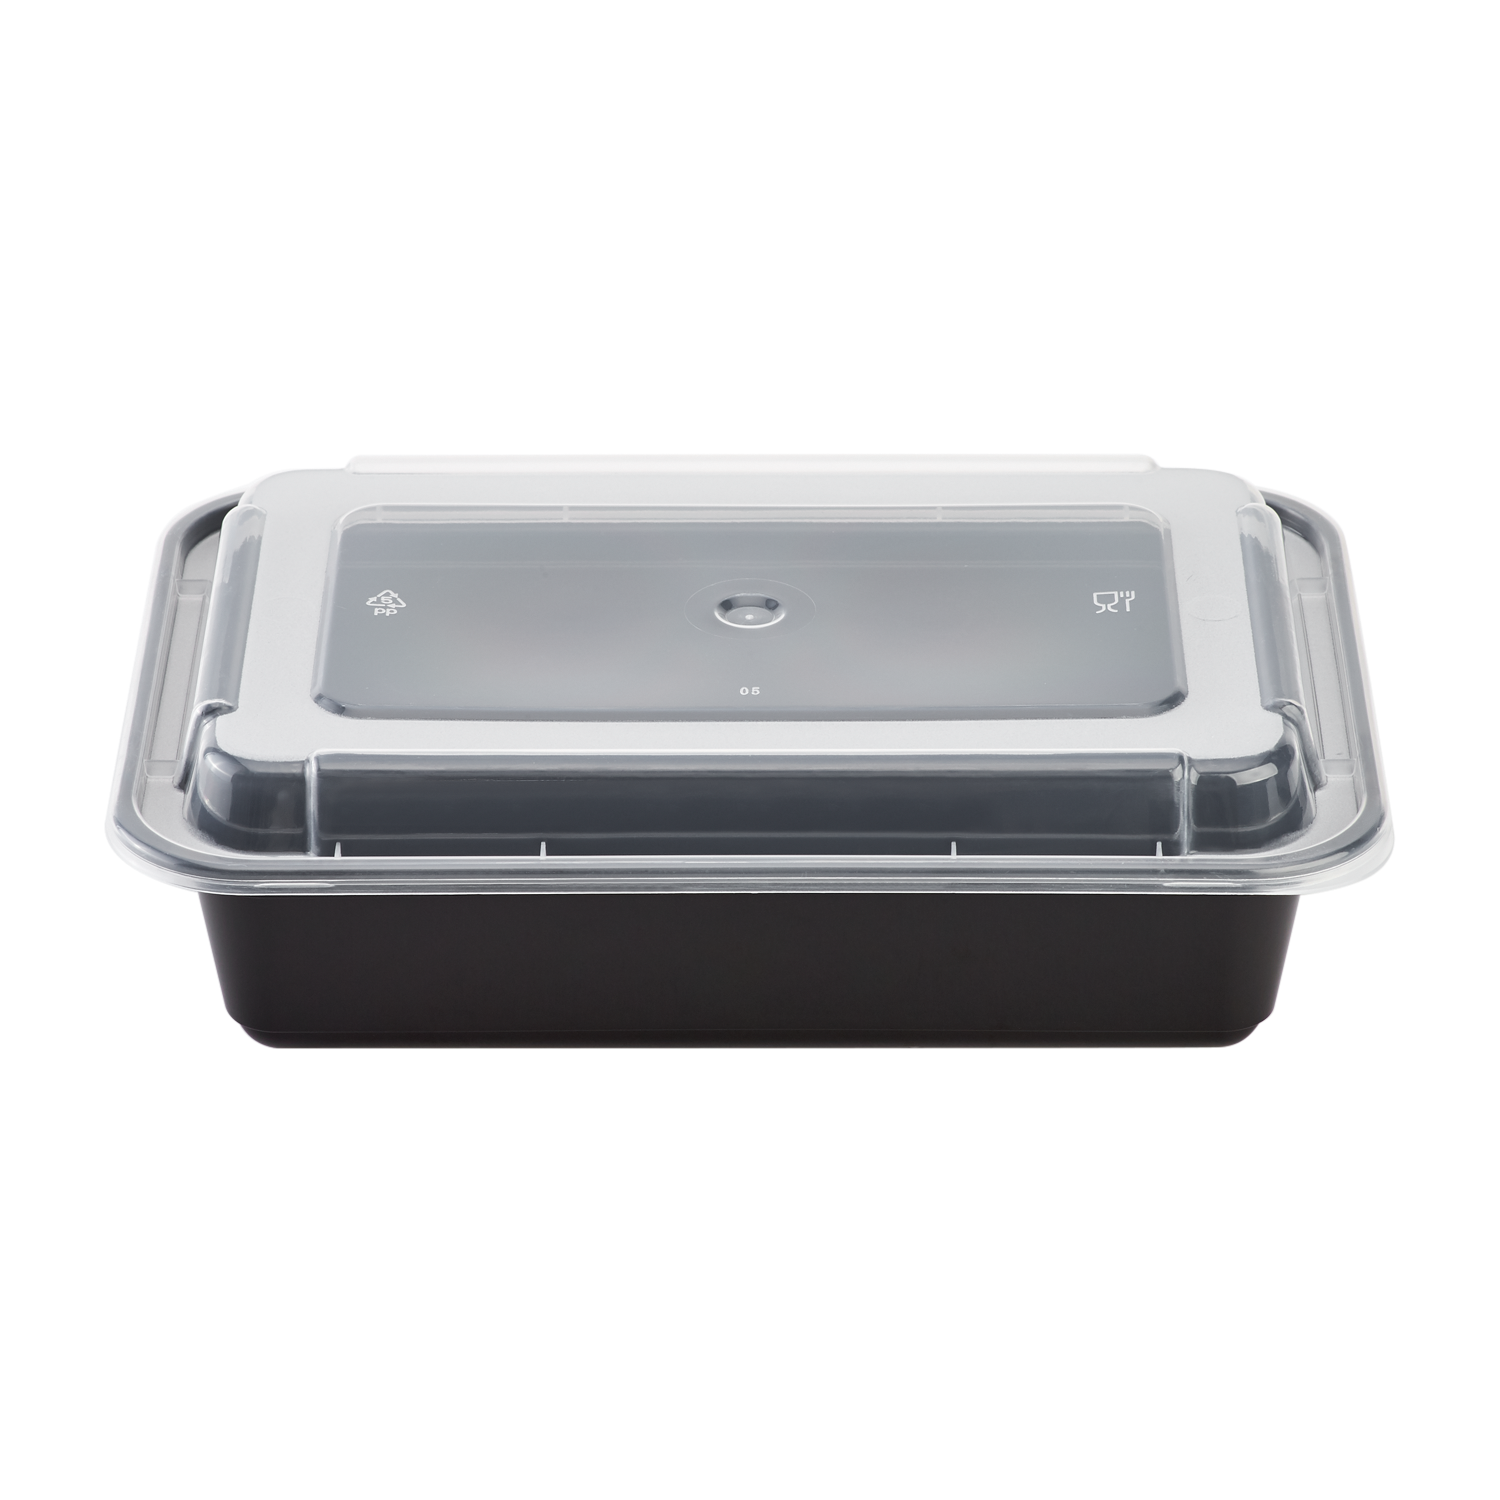 53 oz. Food Grade Flex-off Round Plastic Container (T61053FXCP